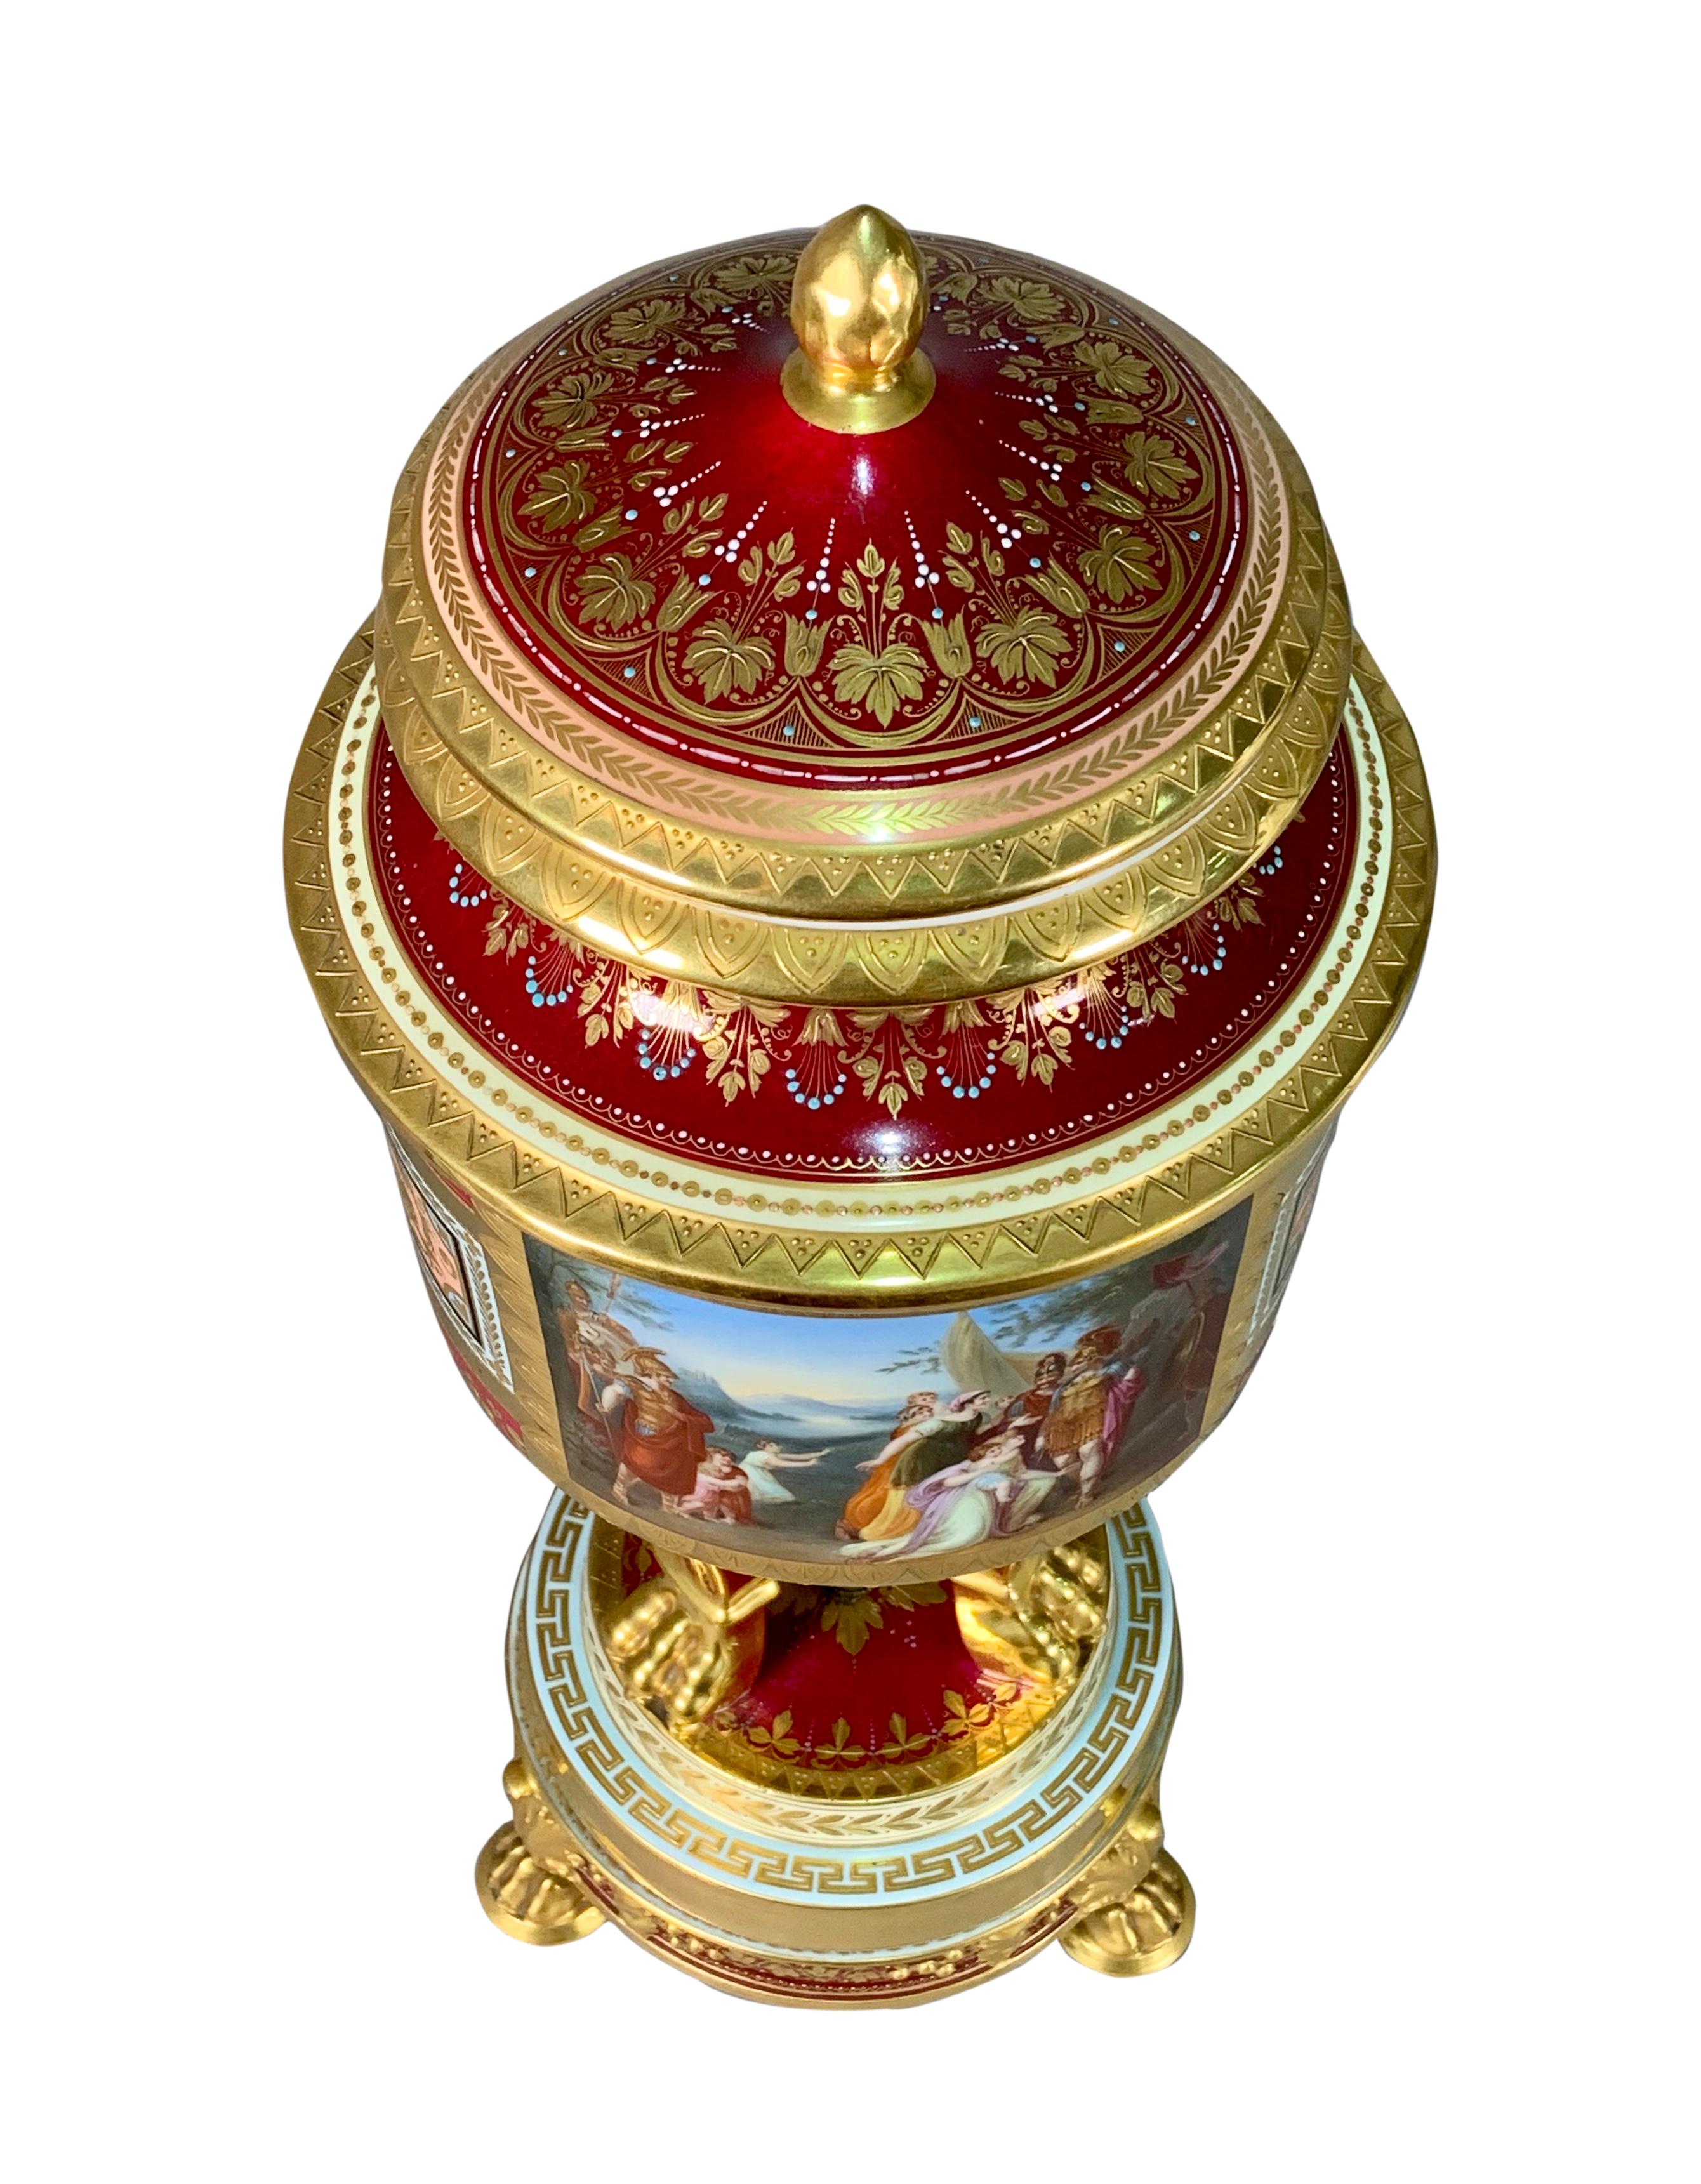 19th Century Royal Vienna Porcelain Urn / Vase For Sale 8